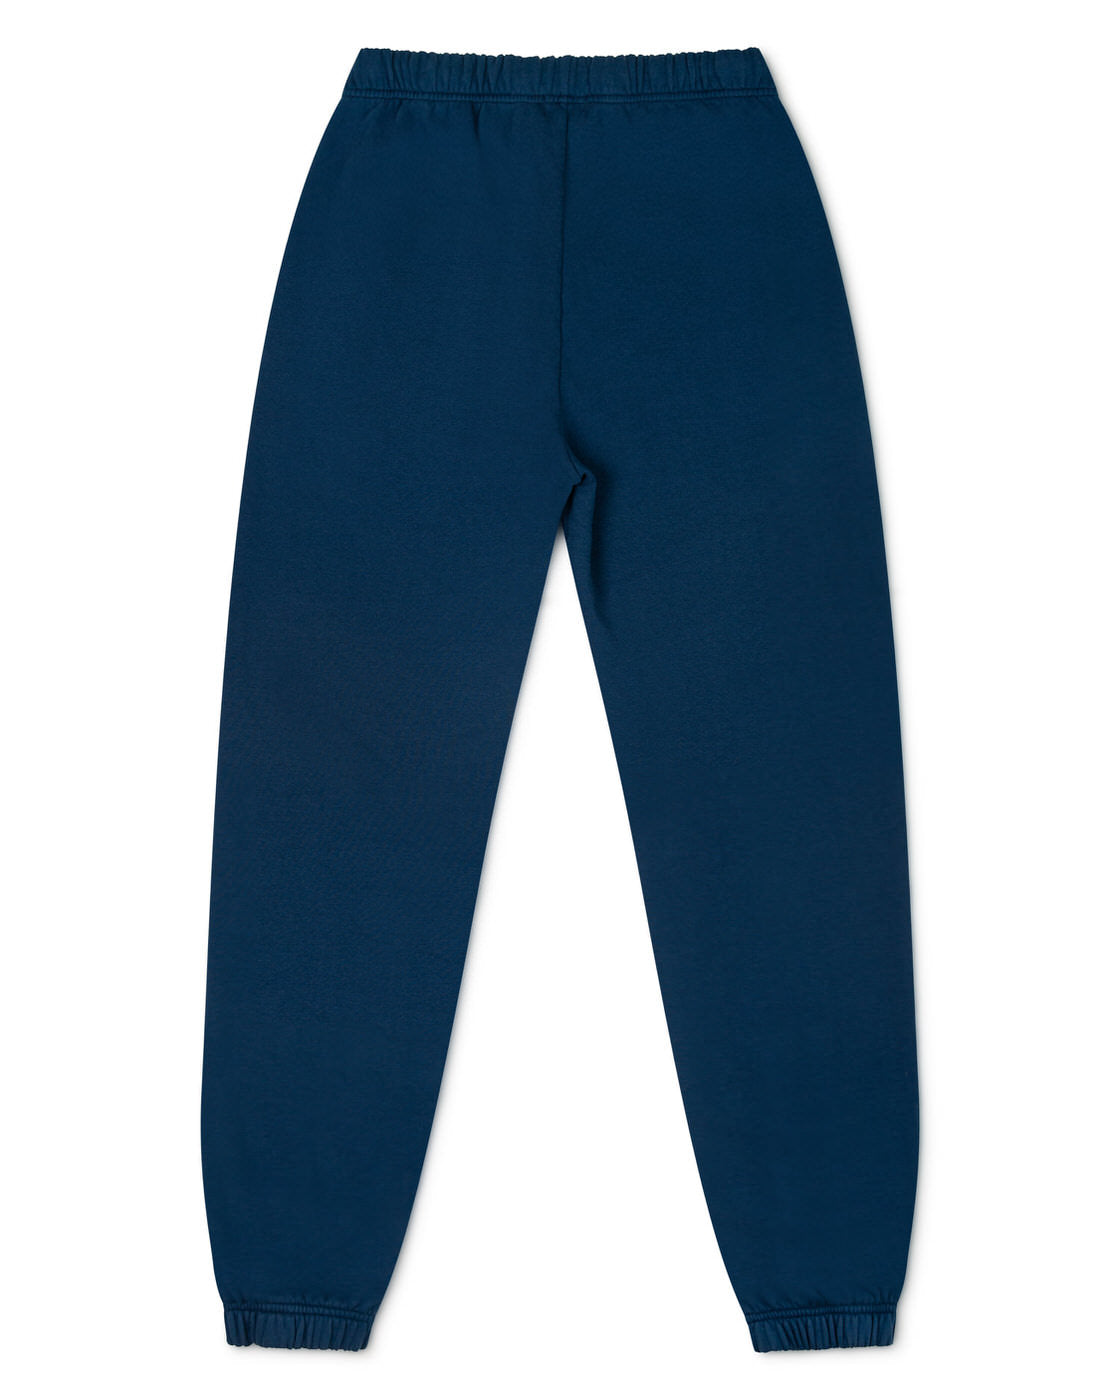 Pantalon de jogging bleu foncé en molleton de coton biologique de Matona